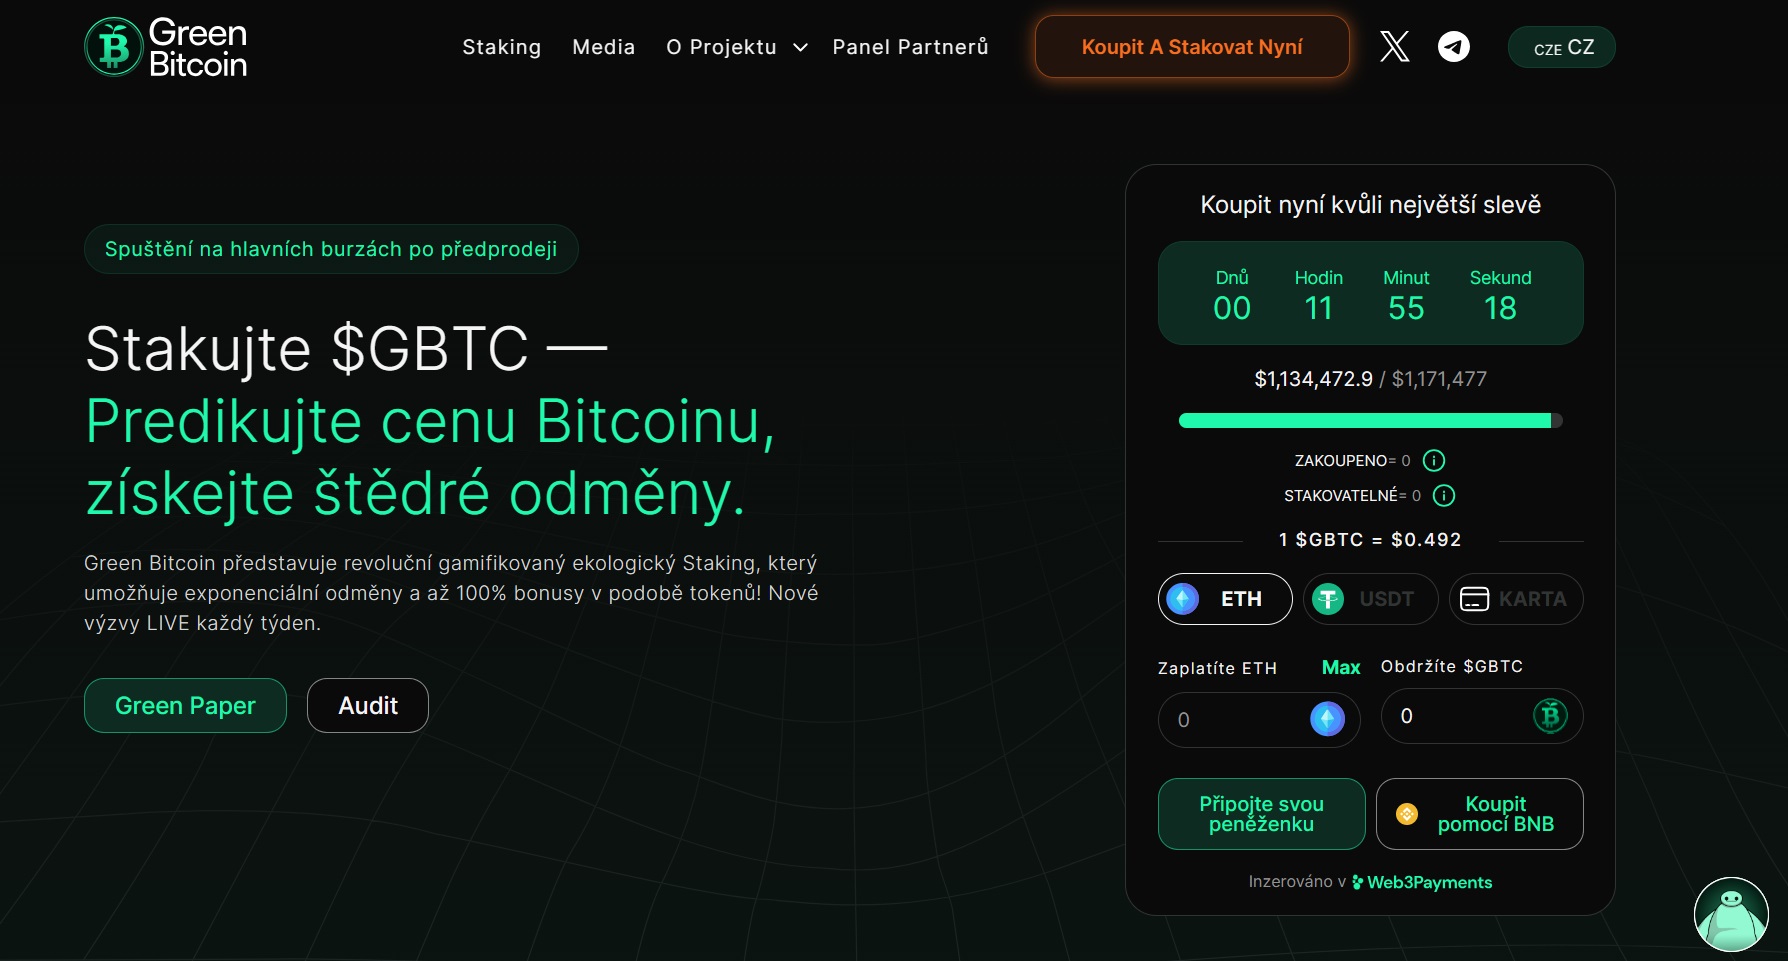 Projekt Green Bitcoin